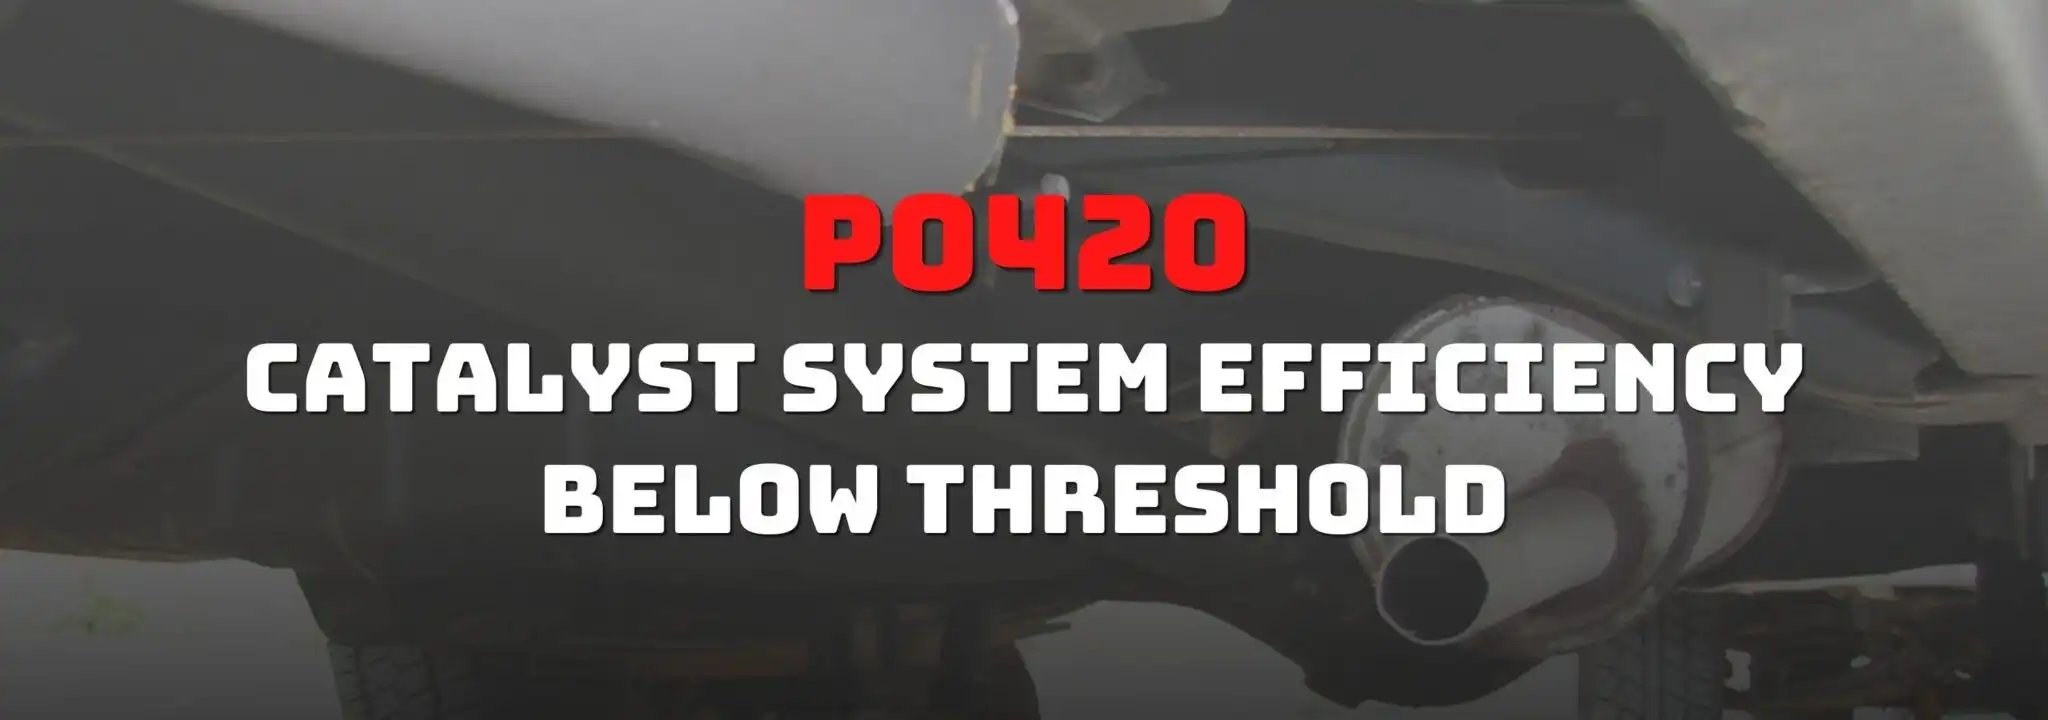 p0420 catalyst system efficiency below threshold